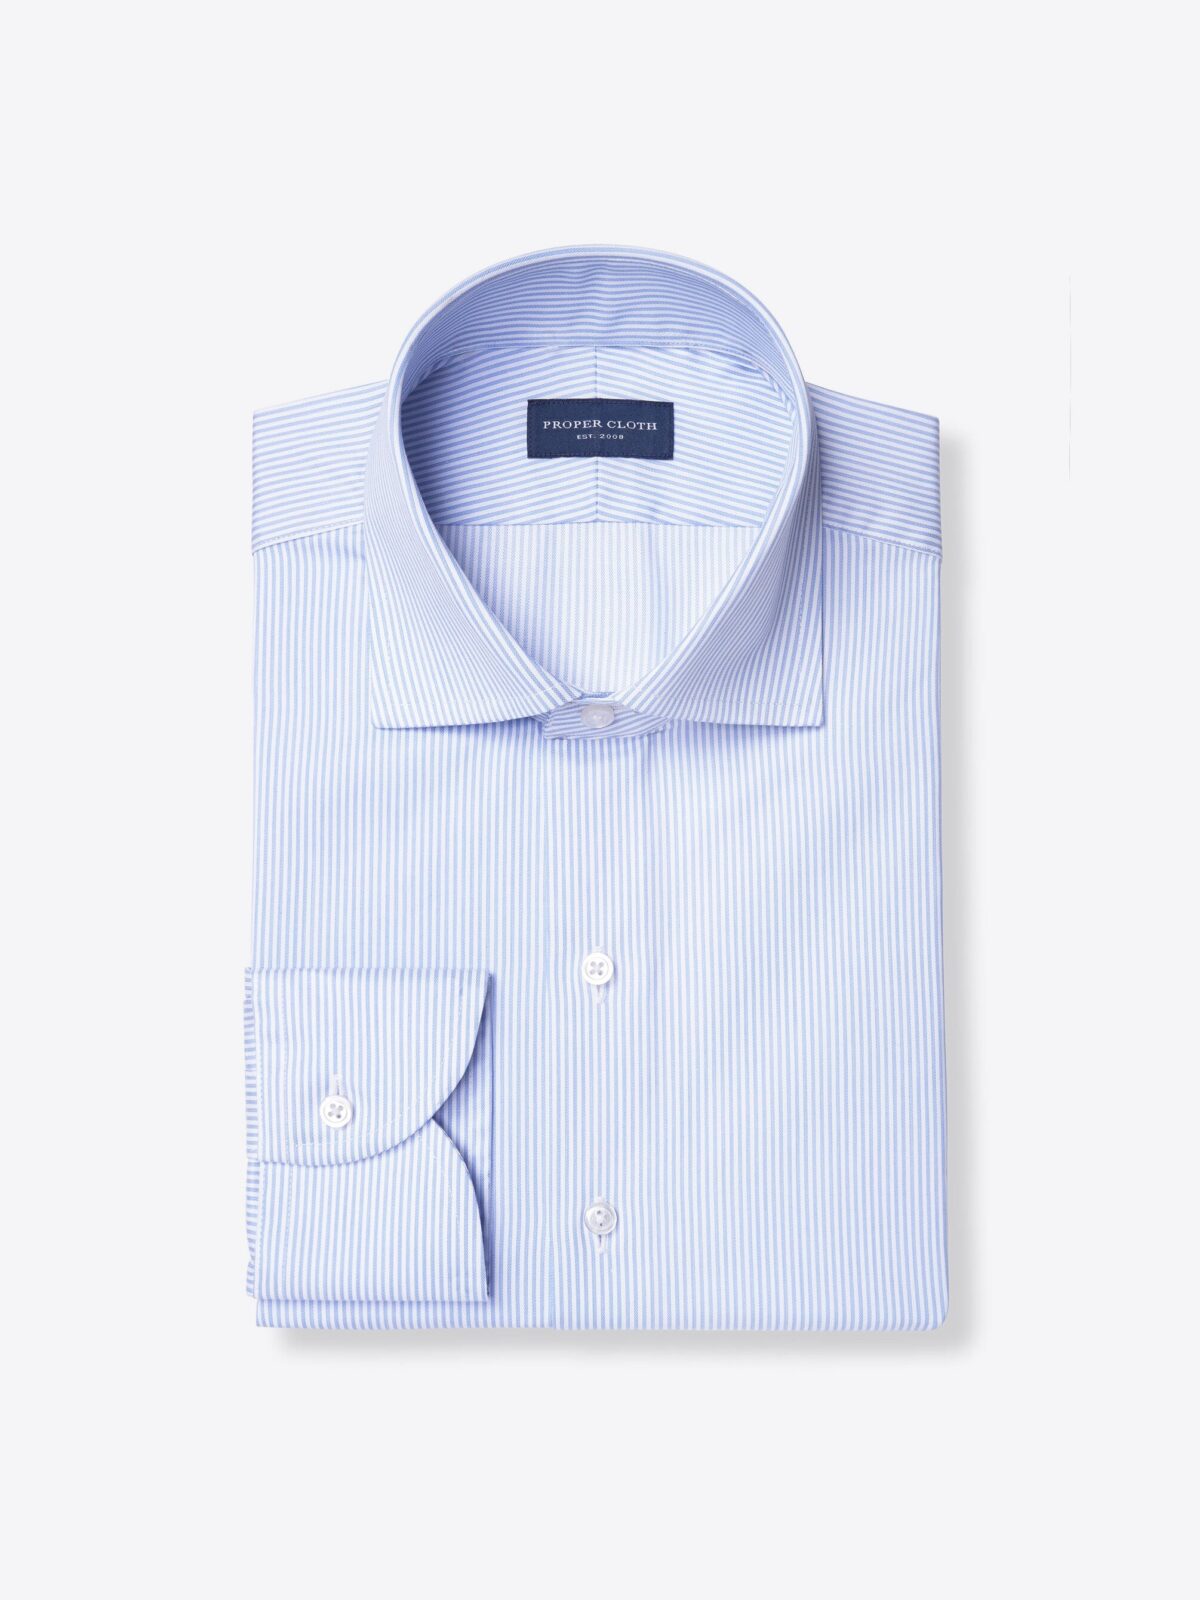 Thomas Mason Wrinkle-Resistant Light Blue Fine Stripe Shirt by